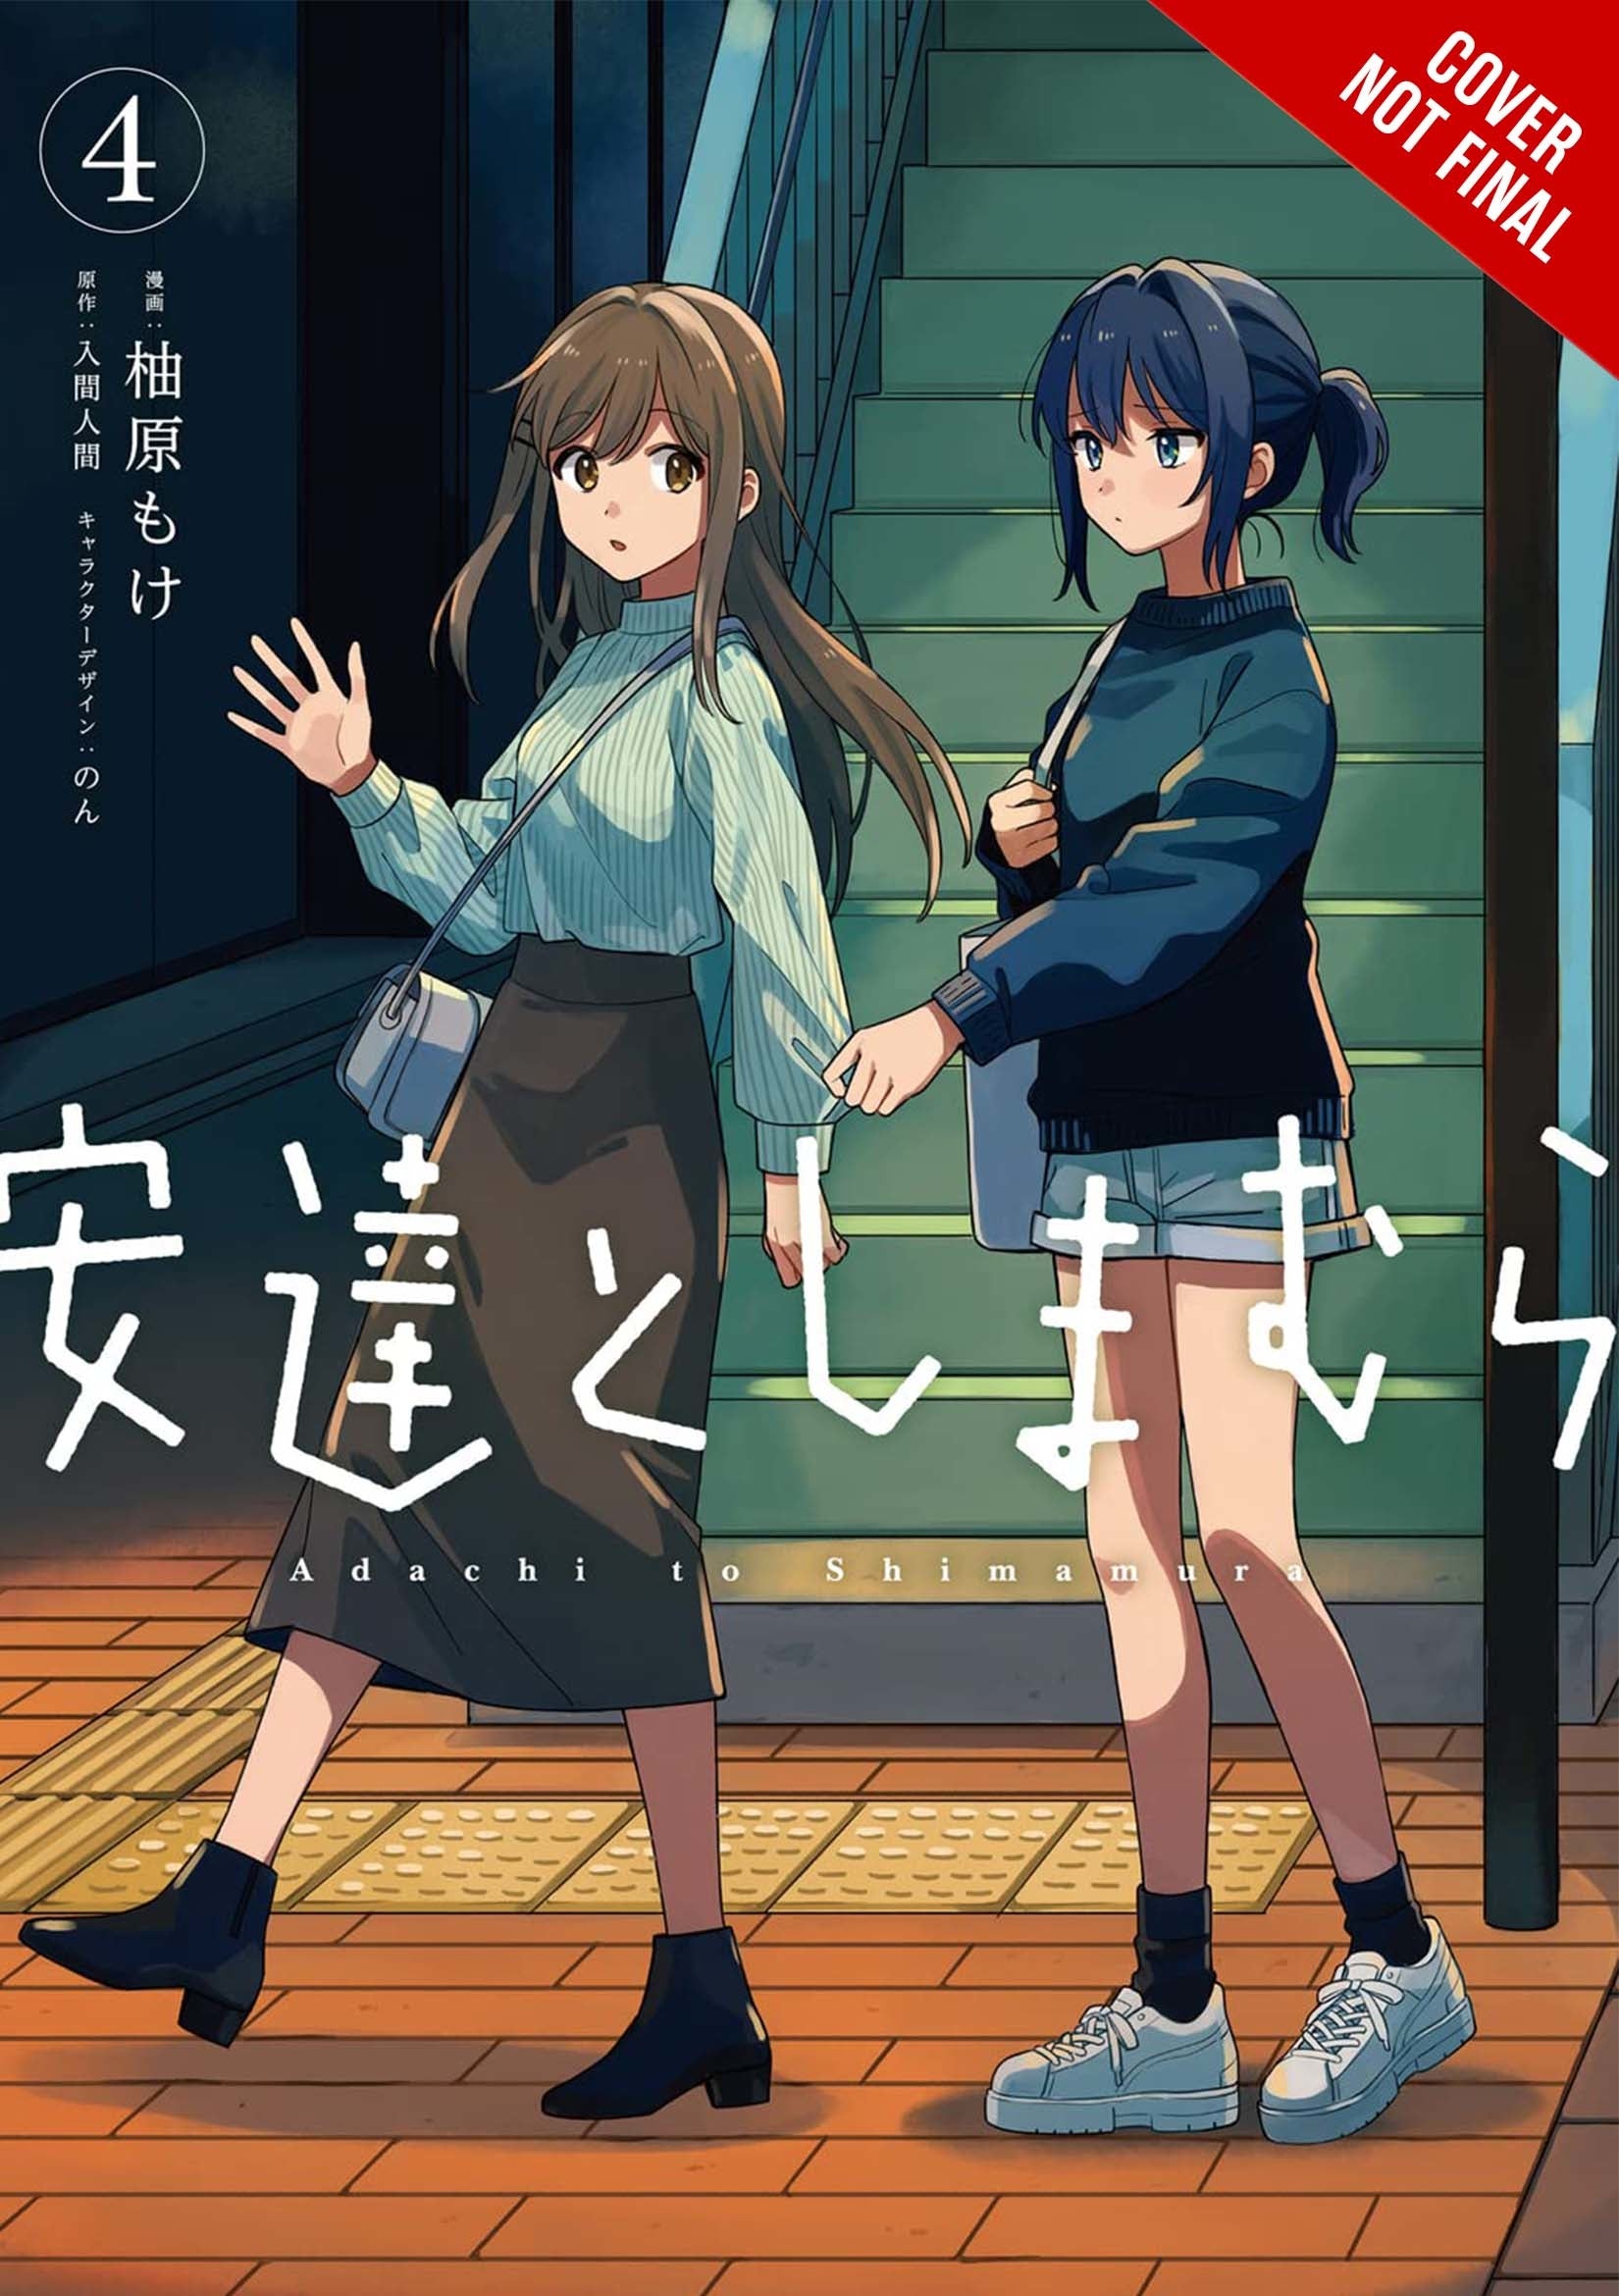 Seven Seas's Adachi and Shimamura Vol 7 Light Novel Light Novel for